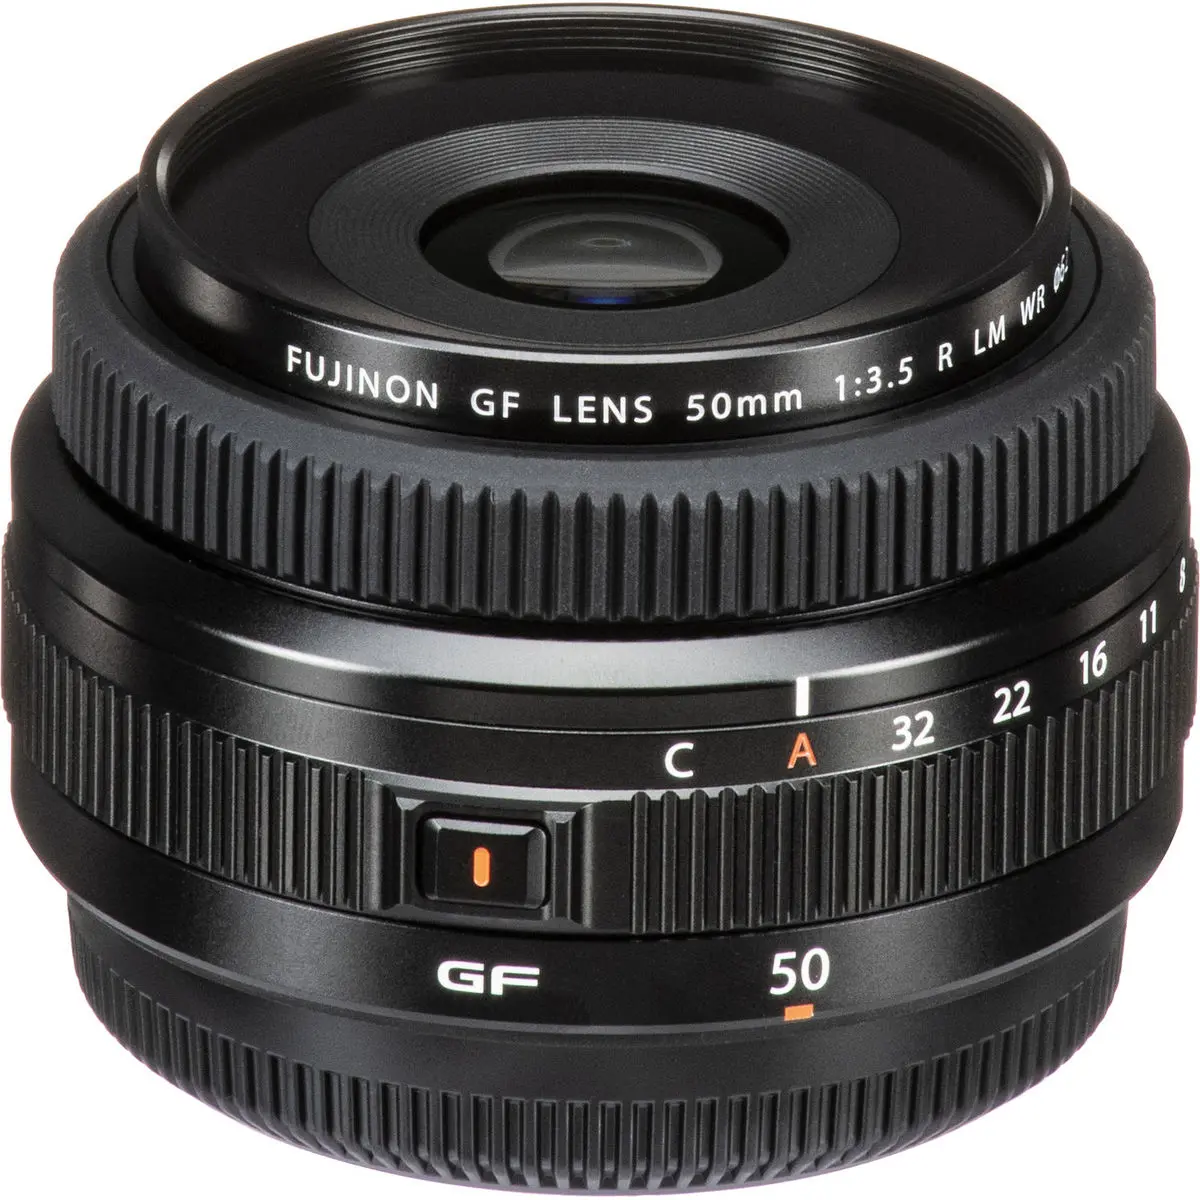 9. FUJINON GF 50mm F3.5 R LM WR Lens